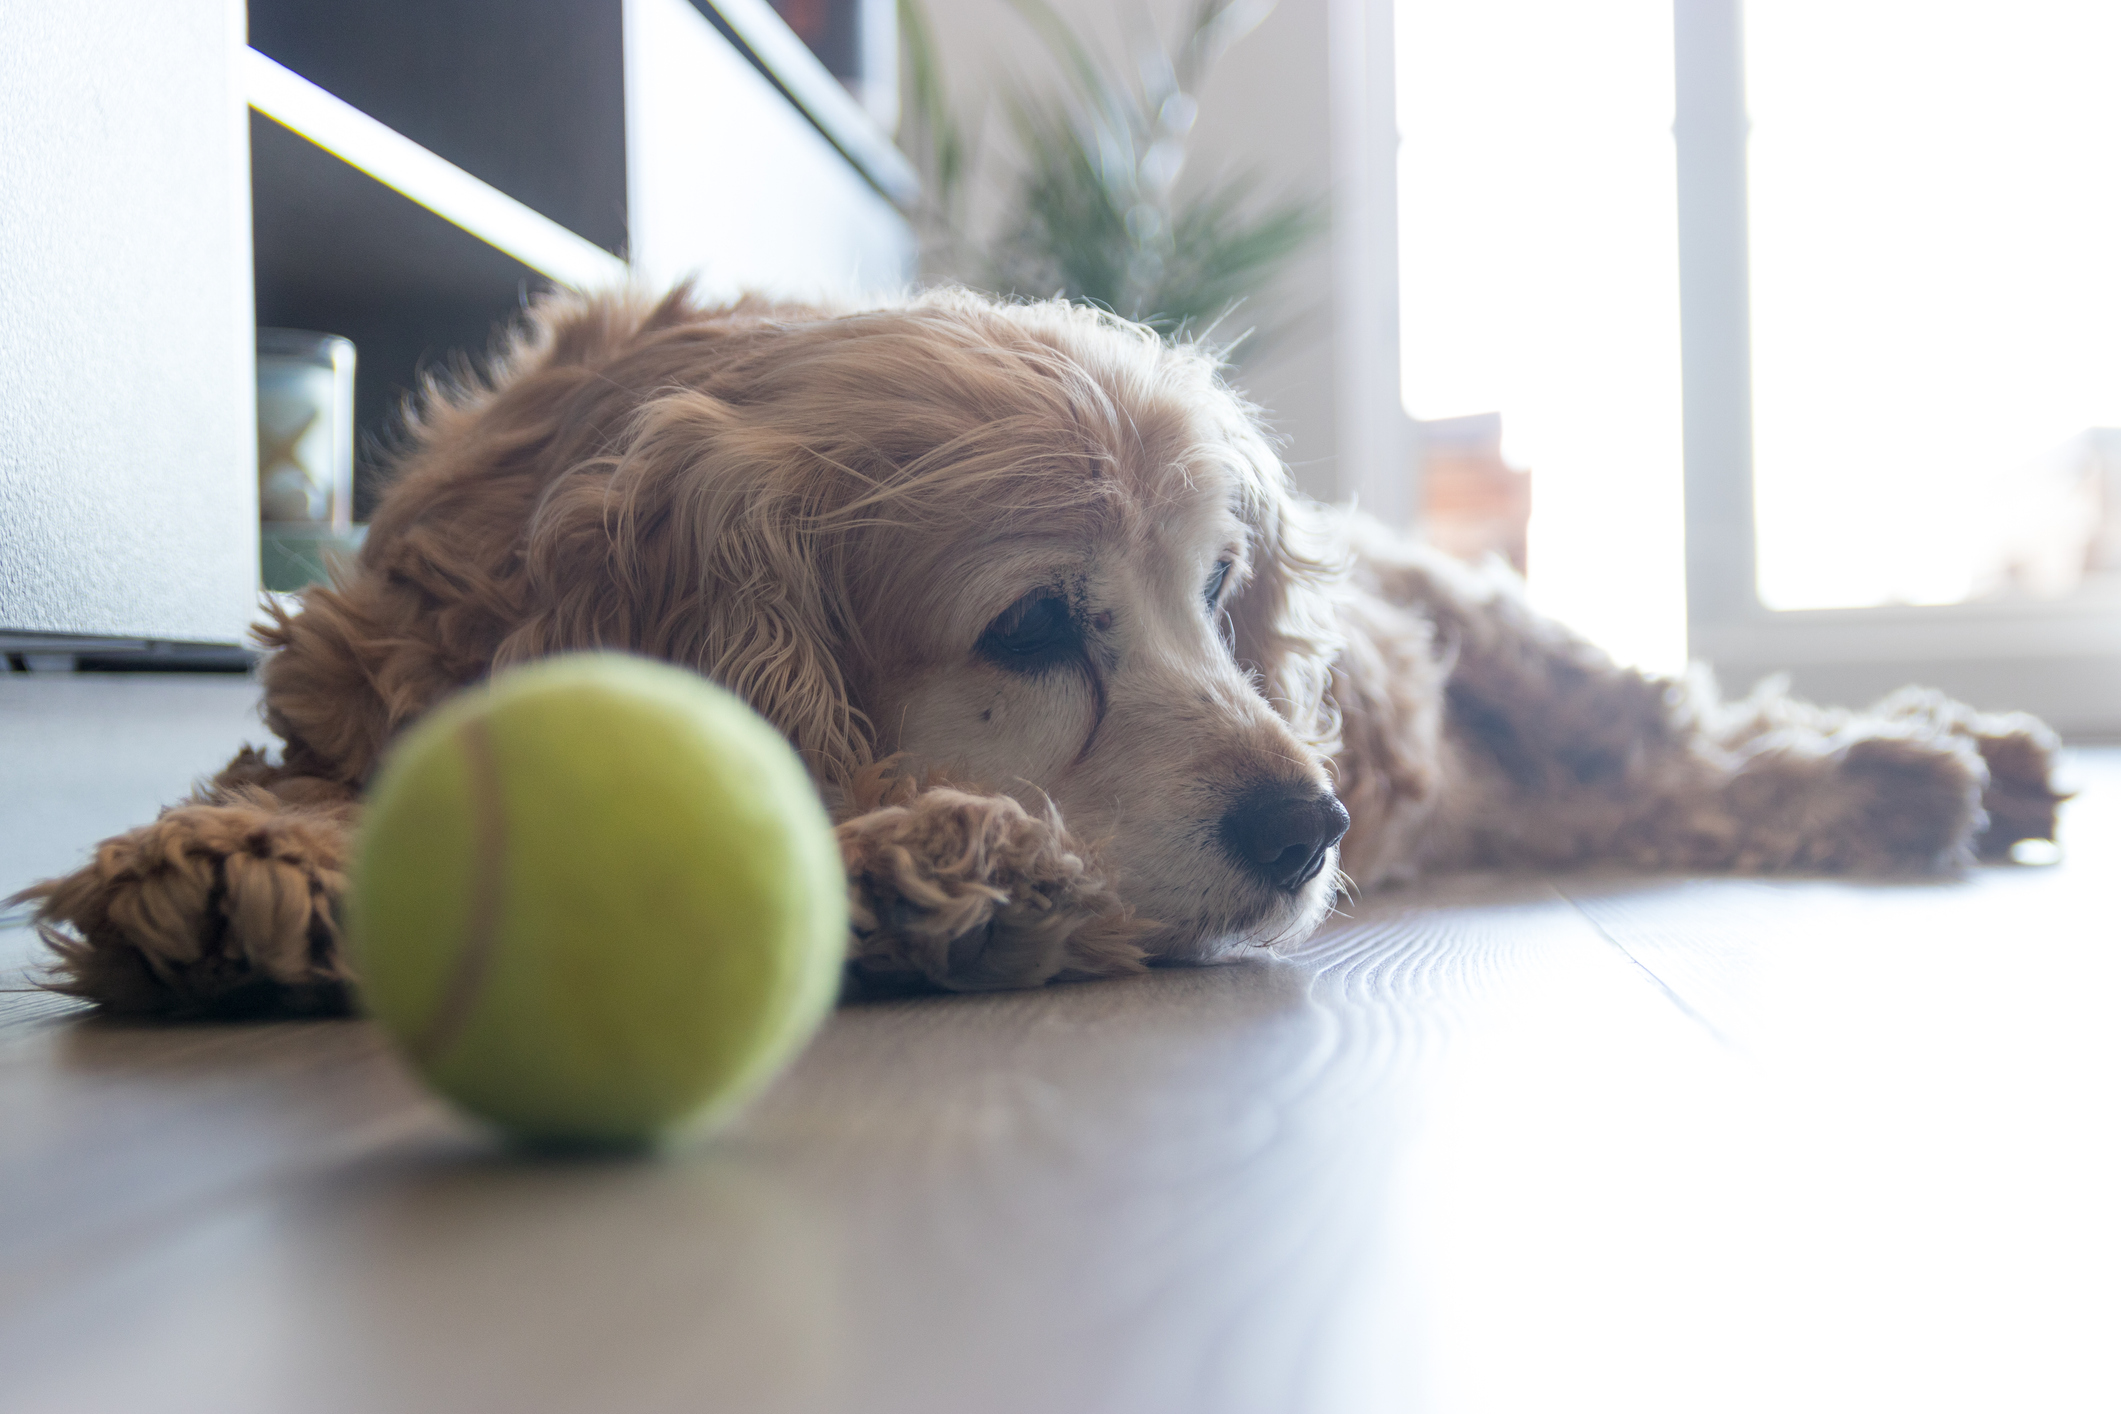 Senior Cocker Spaniel Dog with chronic pain lies next to a tennis ball